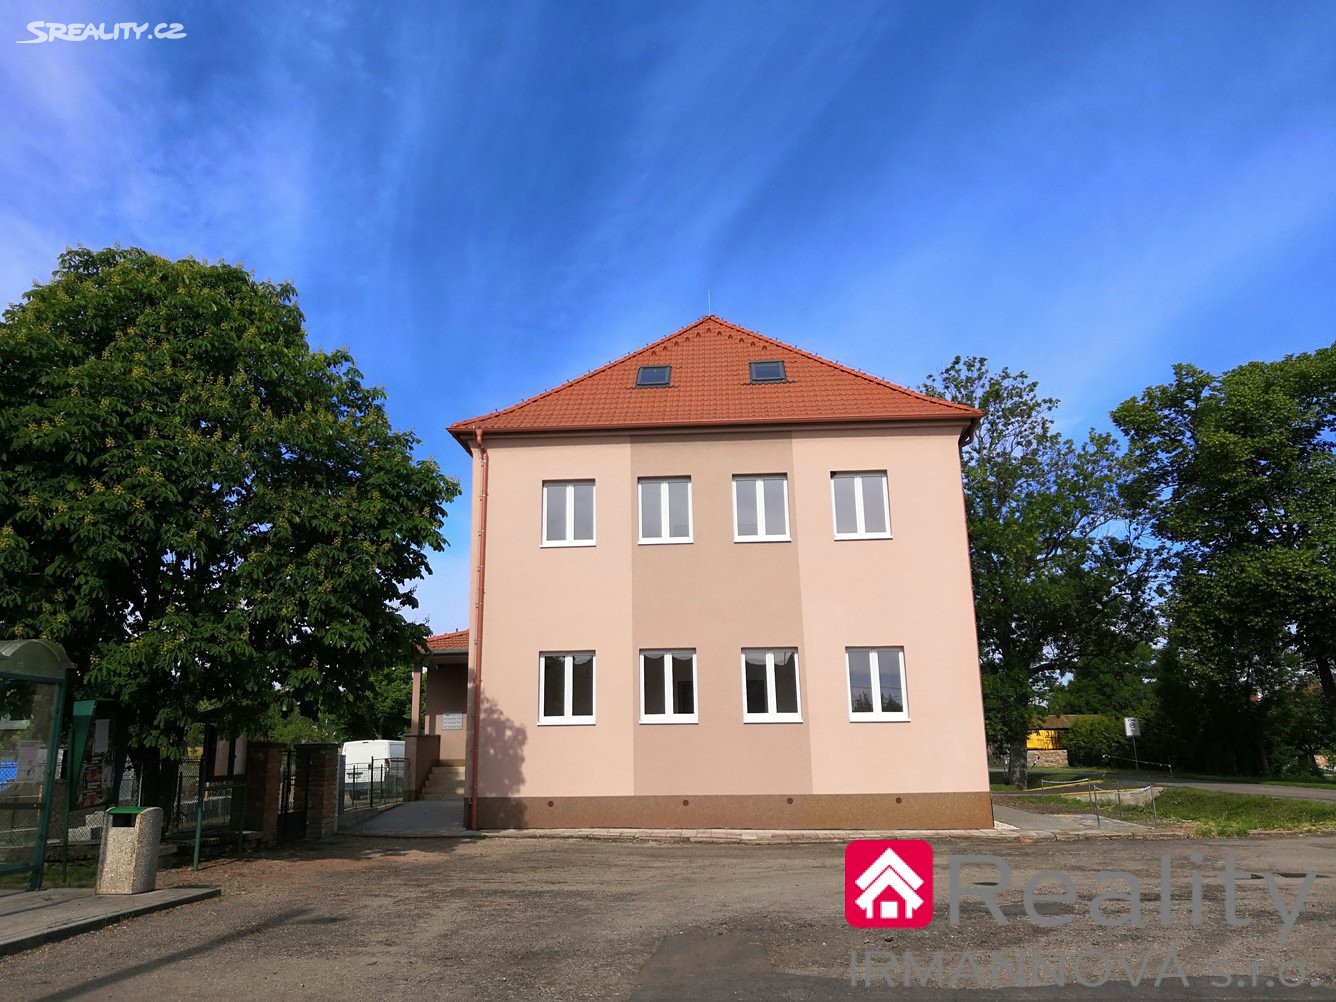 Prodej bytu 1+kk 27 m², Miroslav - Kašenec, okres Znojmo